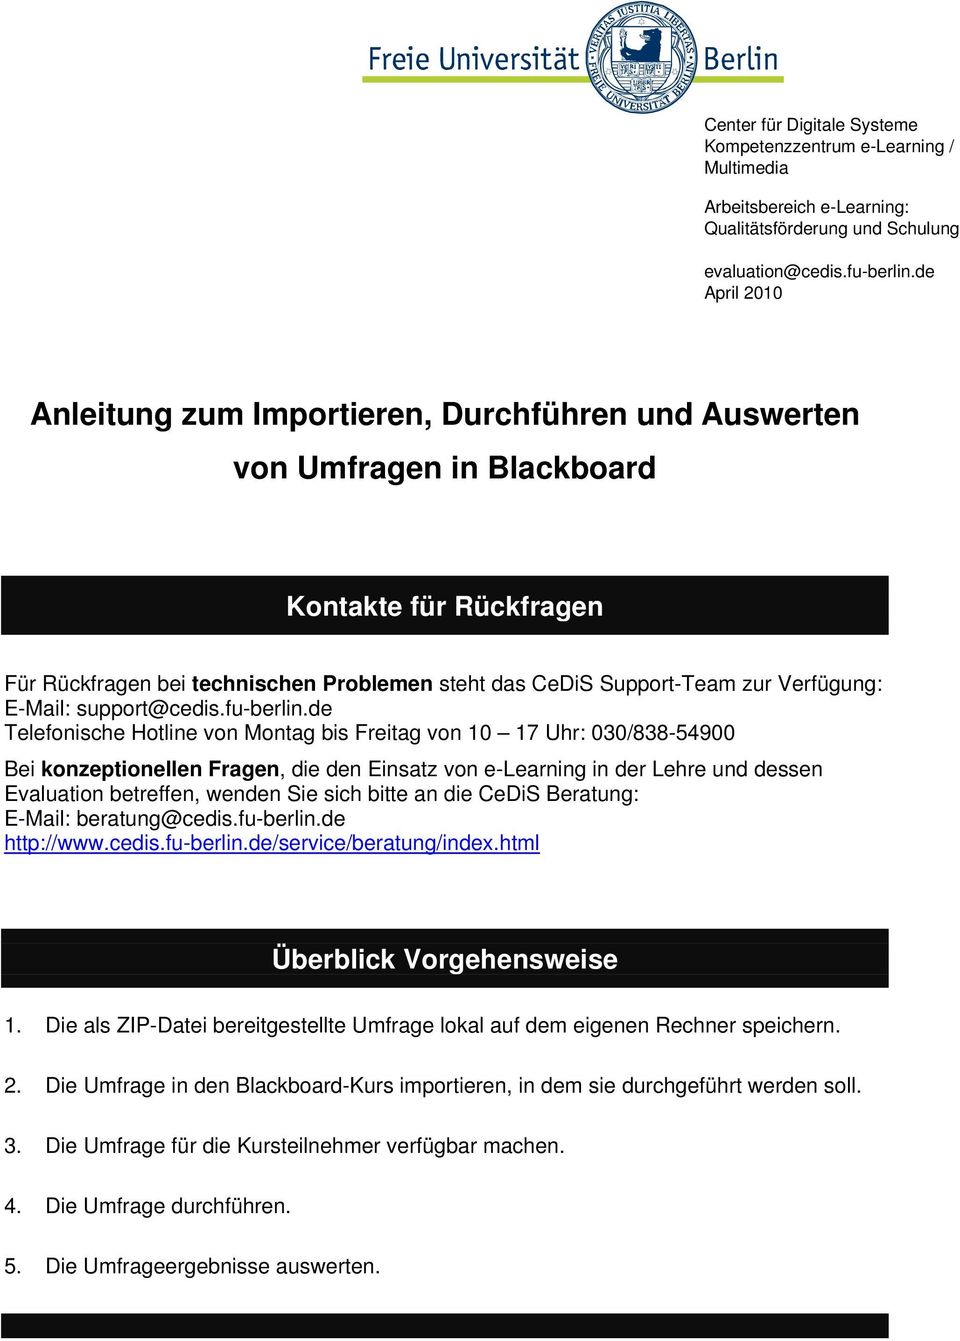 Verfügung: E-Mail: support@cedis.fu-berlin.